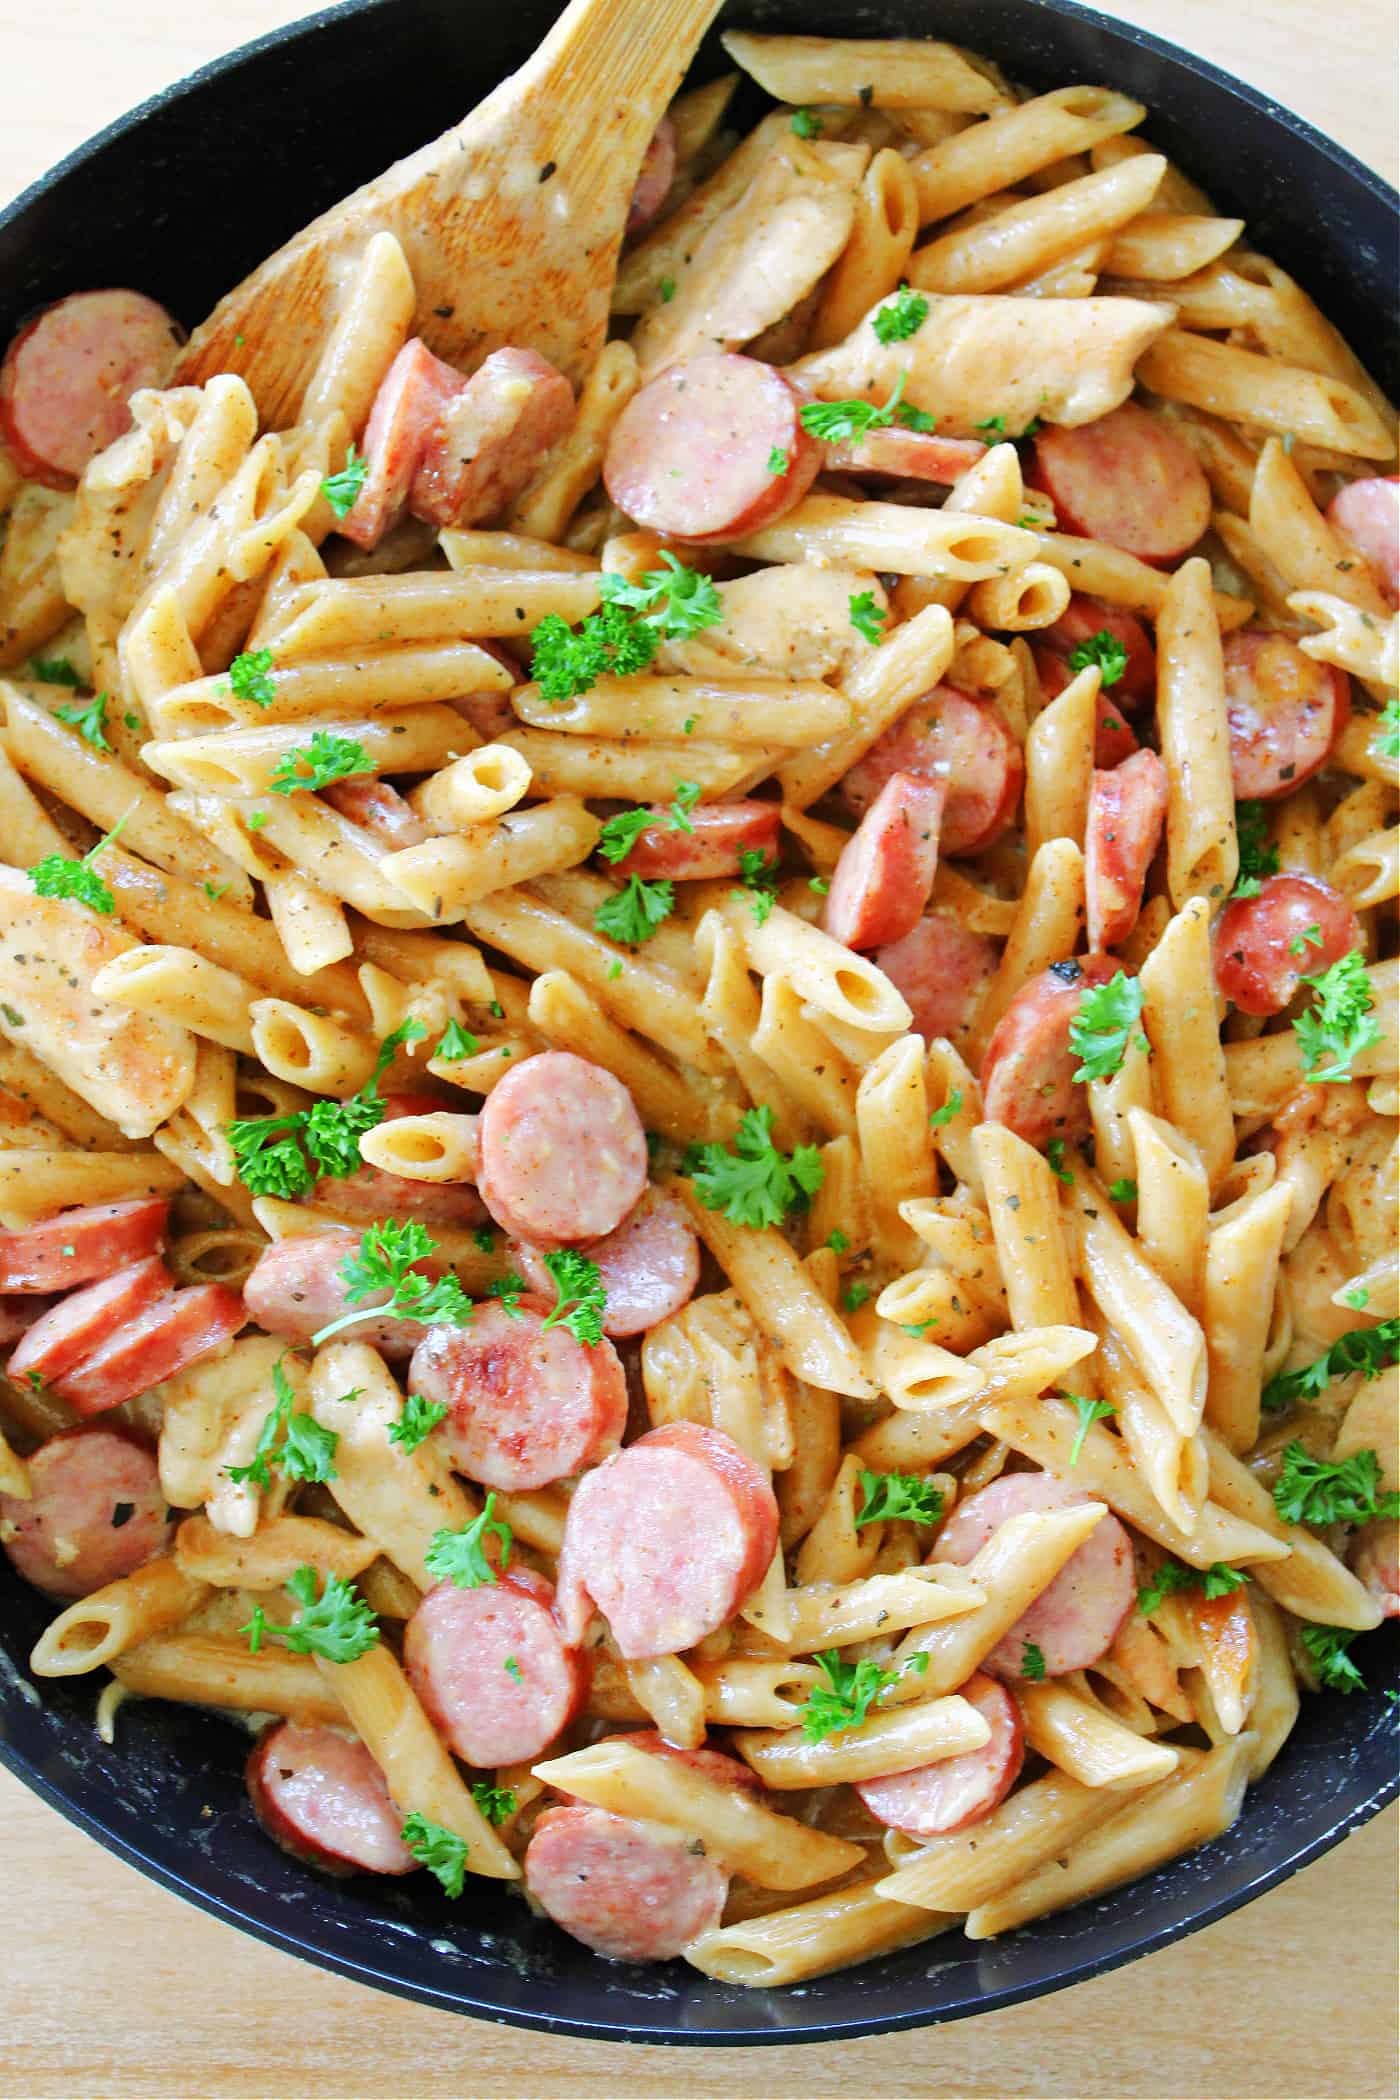 cajun chicken sausage and pasta in a skillet